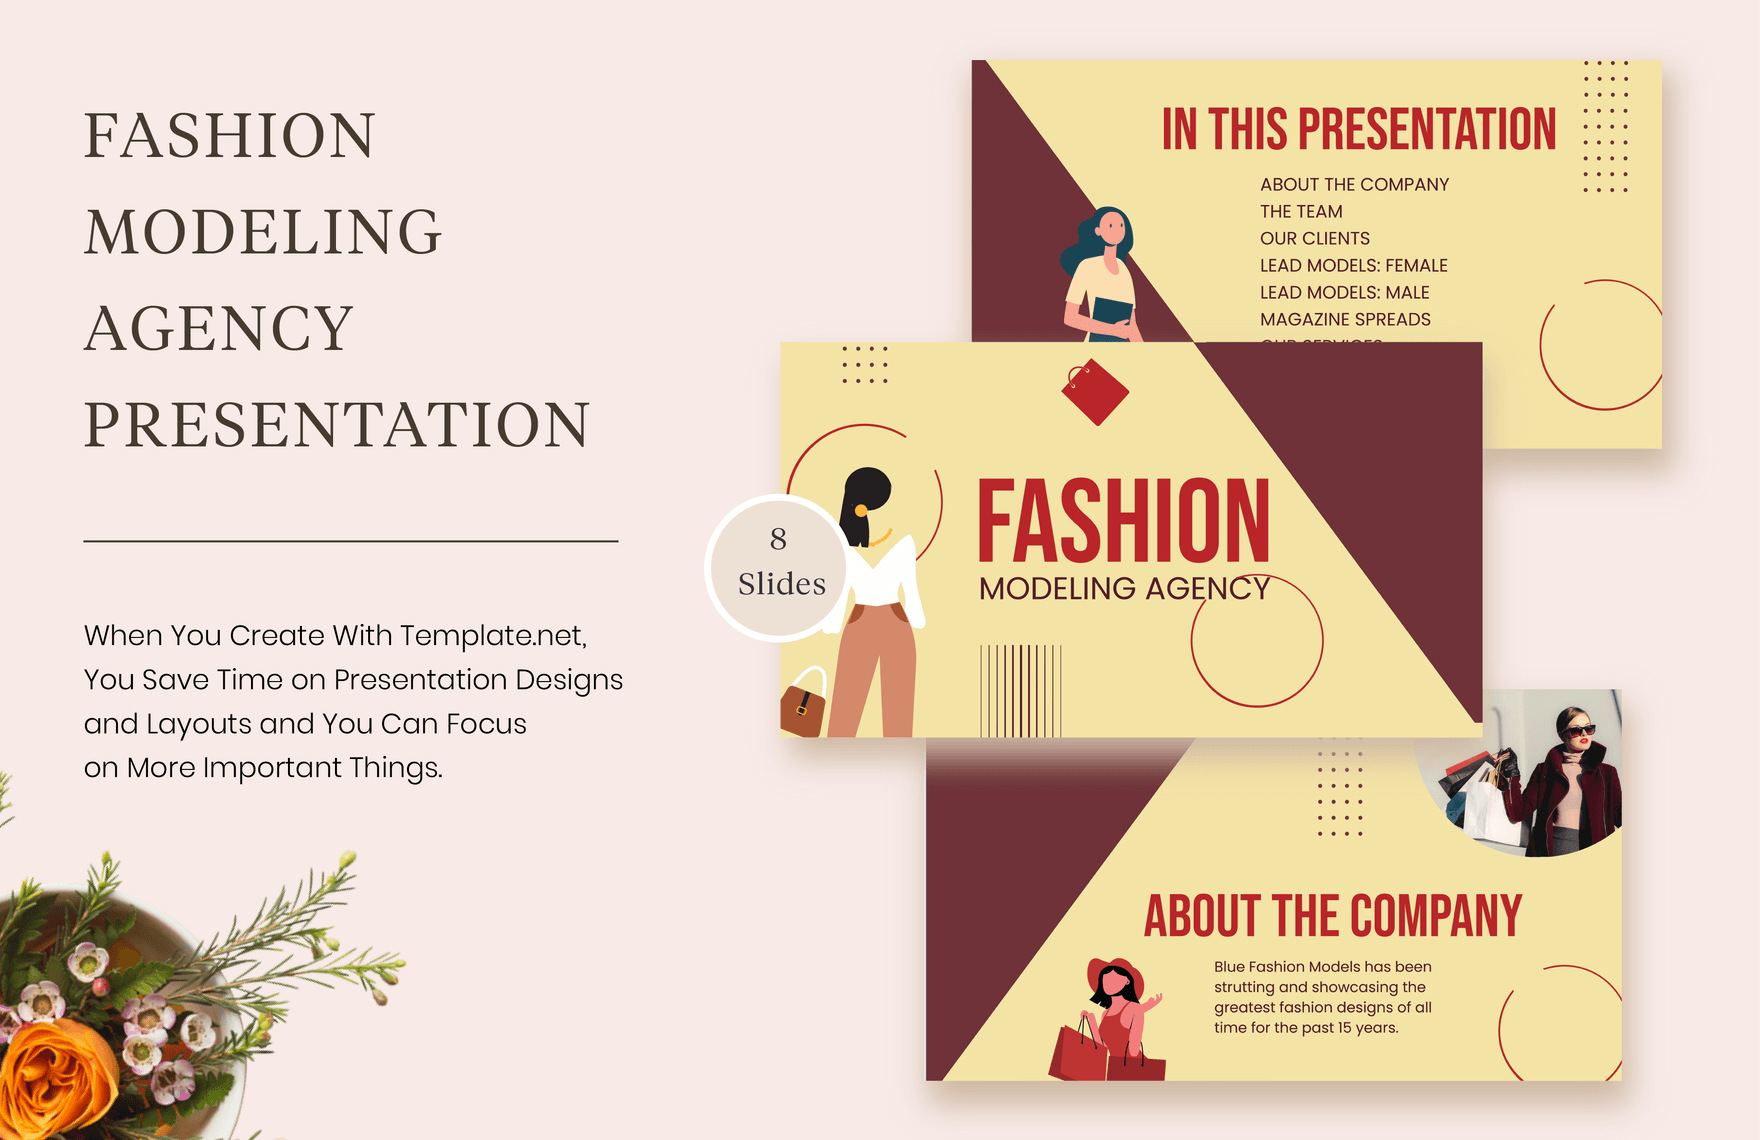 Fashion Modeling Agency Presentation